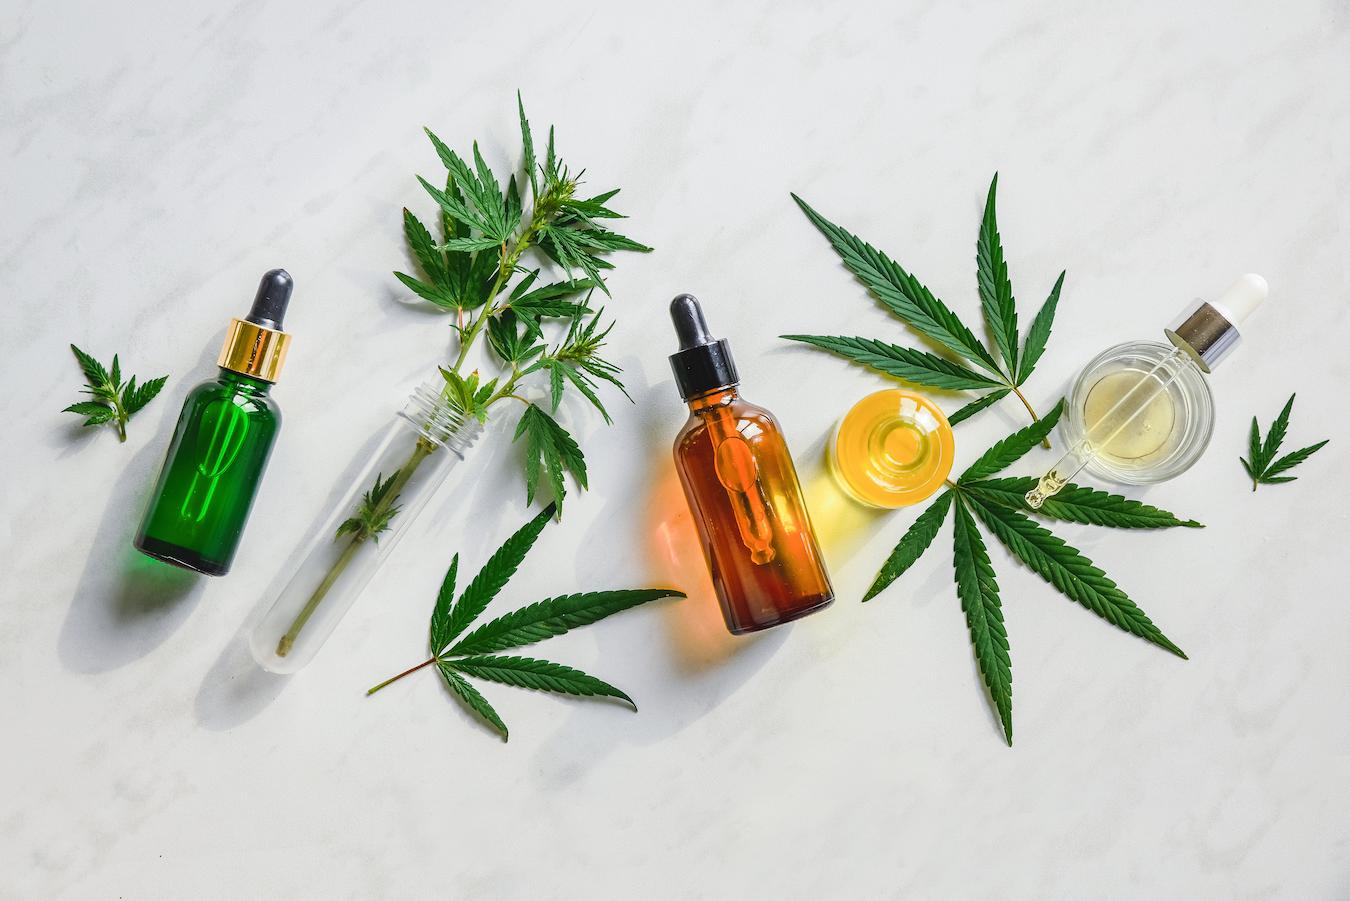 various glass bottles and marijuana leaves on a countertop health food cbd product cbd content full spectrum cbd hemp extract cbd oil